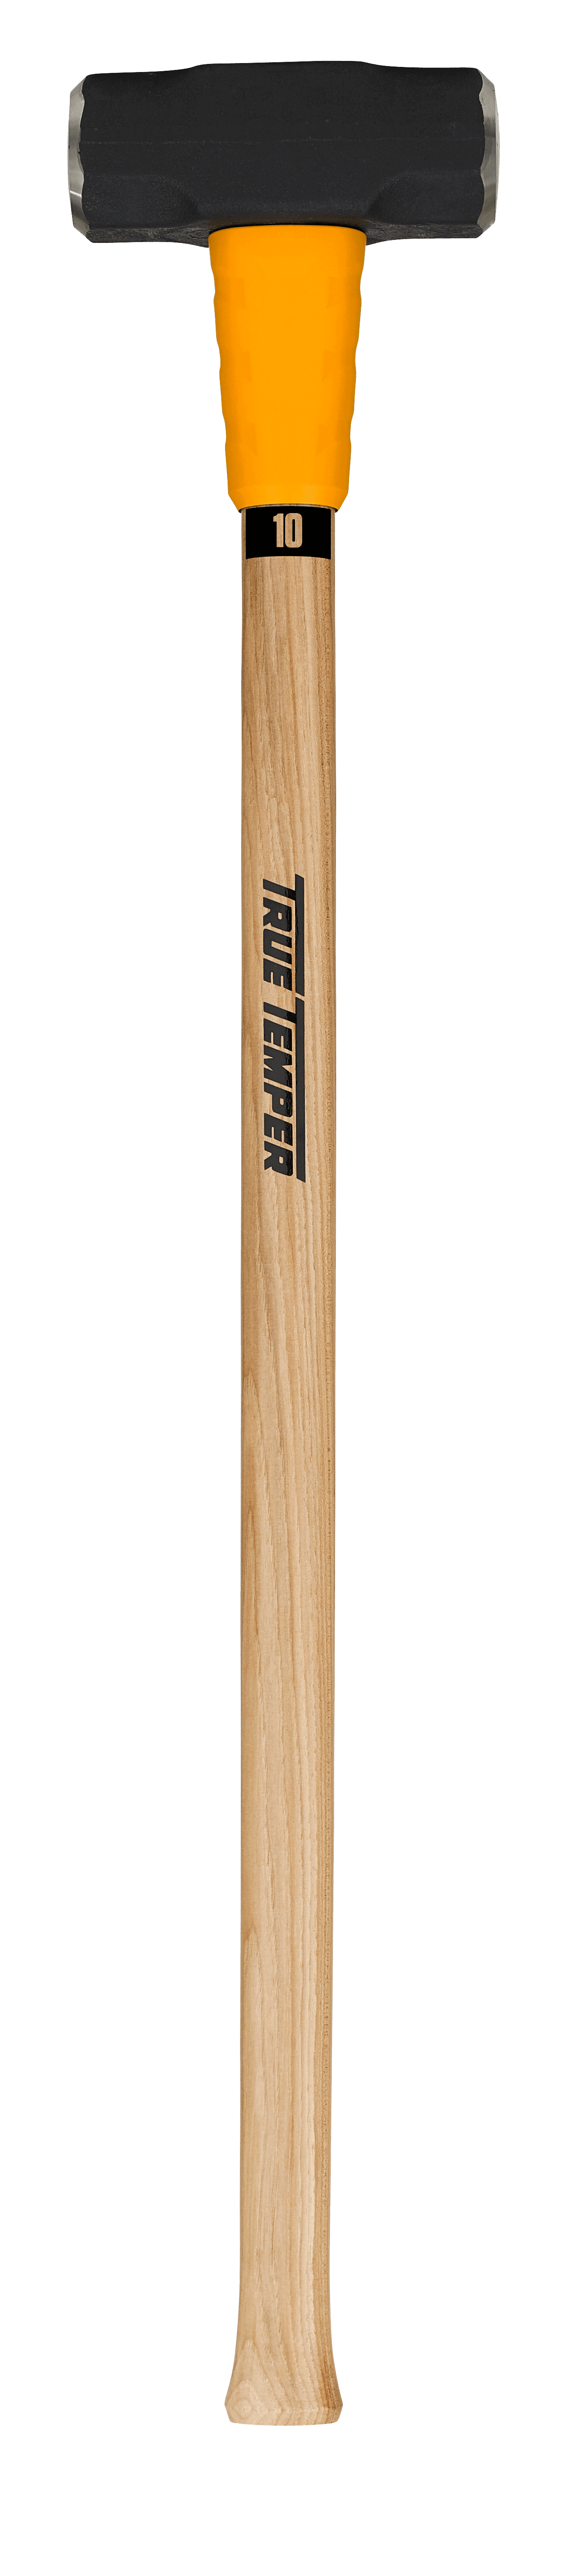 Toughstrike 10 lb. American Hickory Sledge Hammer 027-20185200